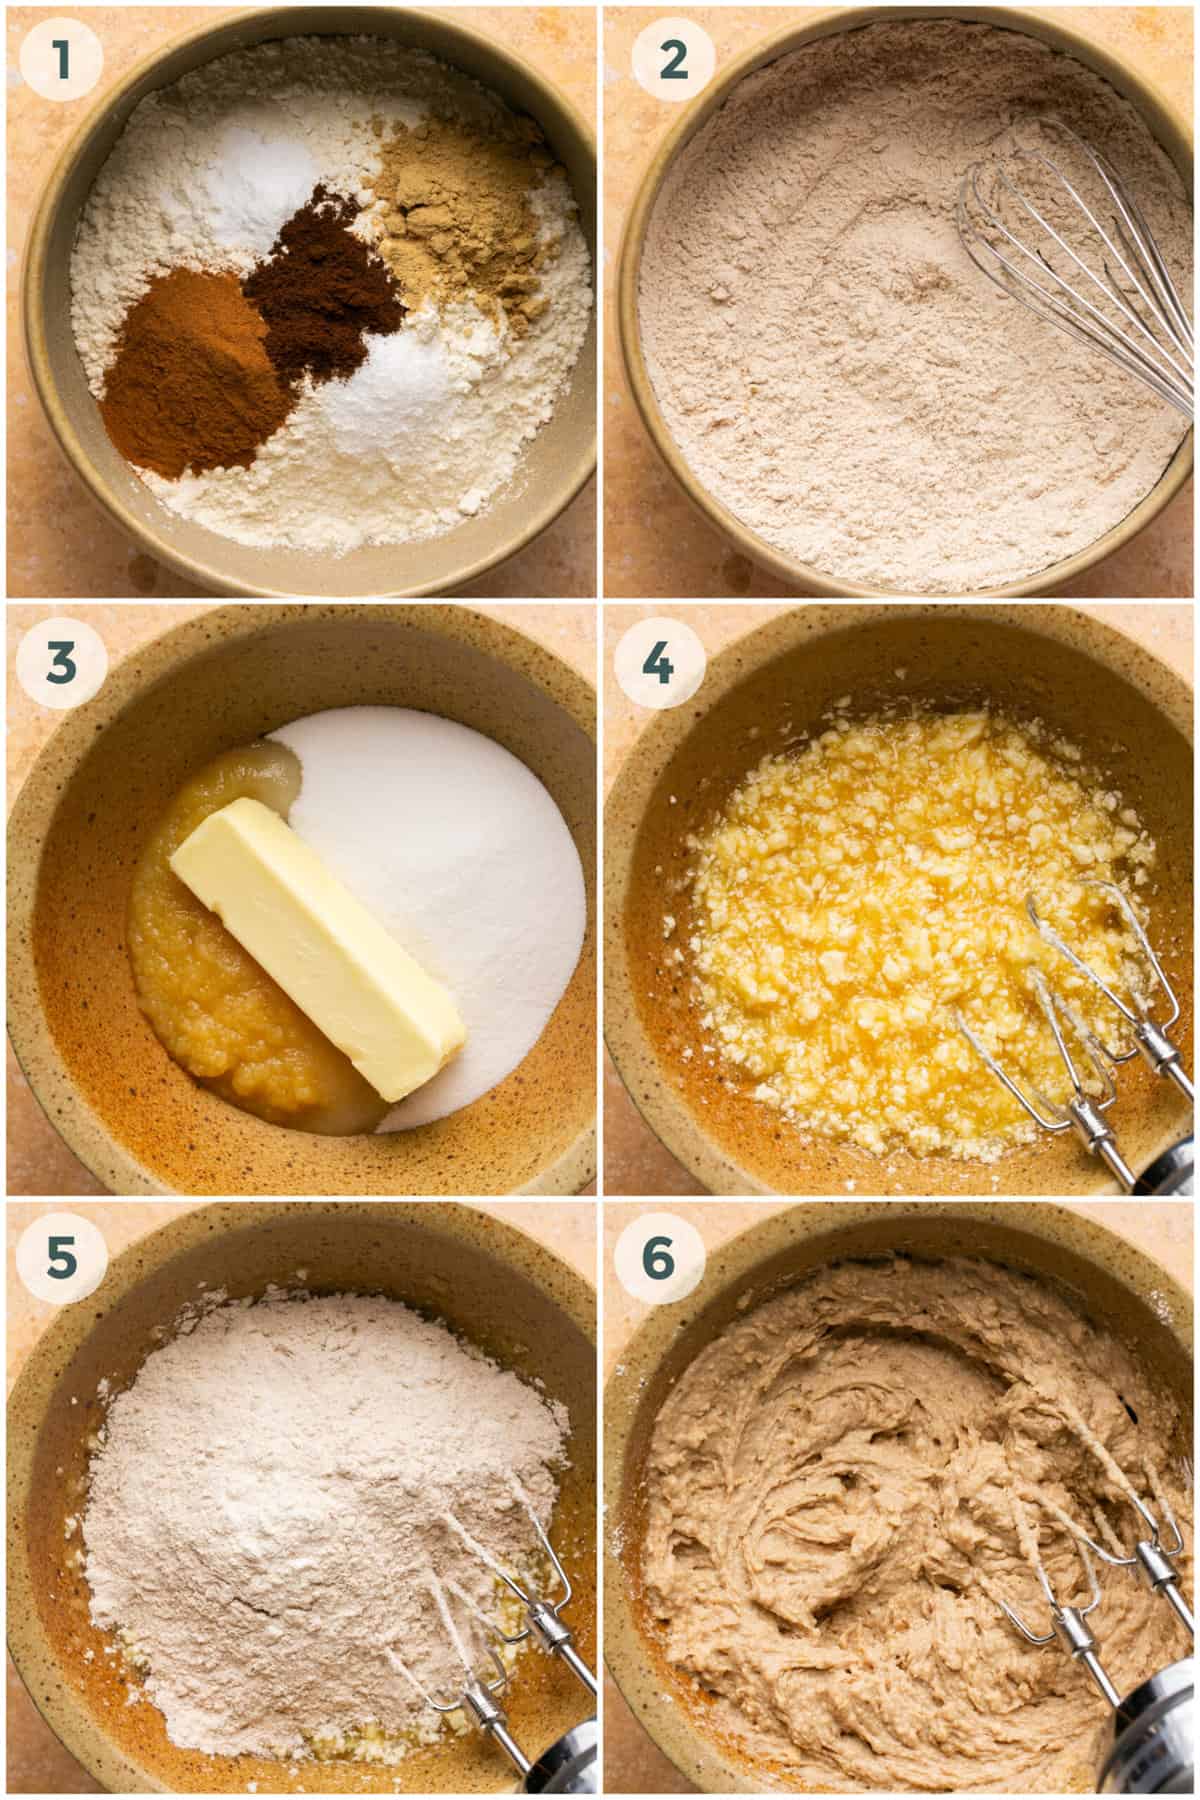 steps 1-6 of preparing gingerbread loaf recipe